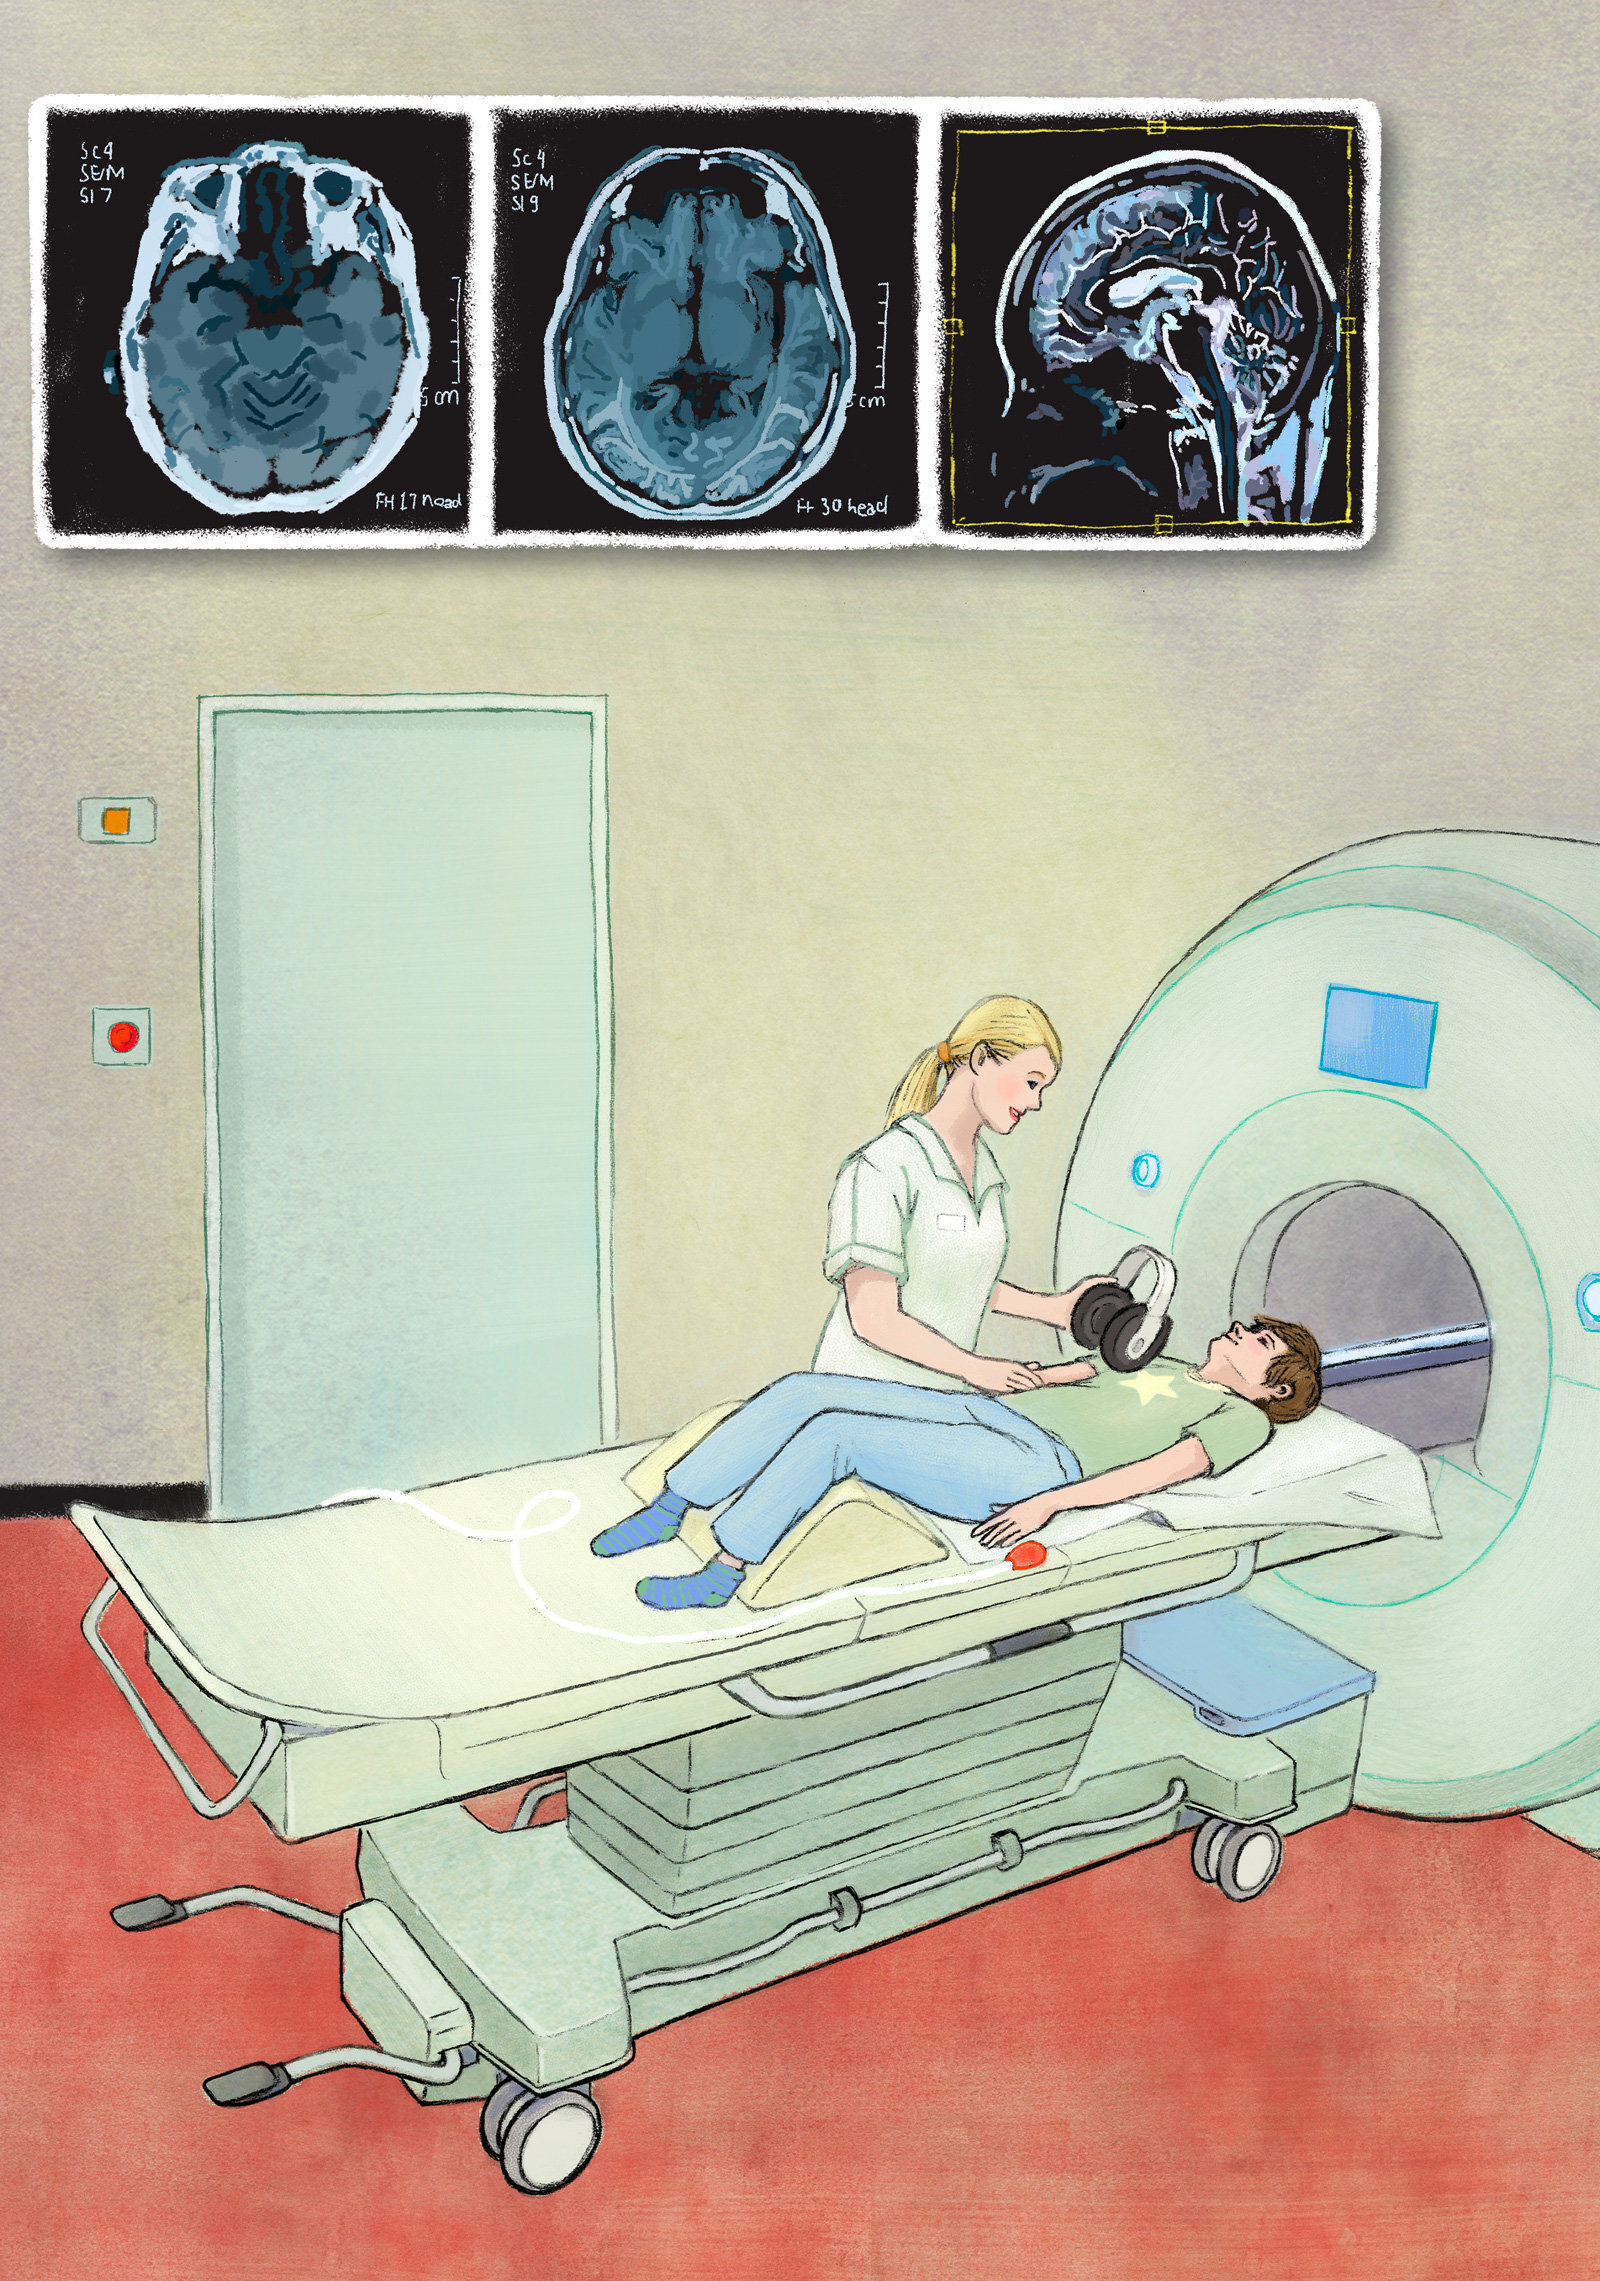 illustra_OliviaAloisi_oculus-illustration-epilepsie_episuisse_MRI